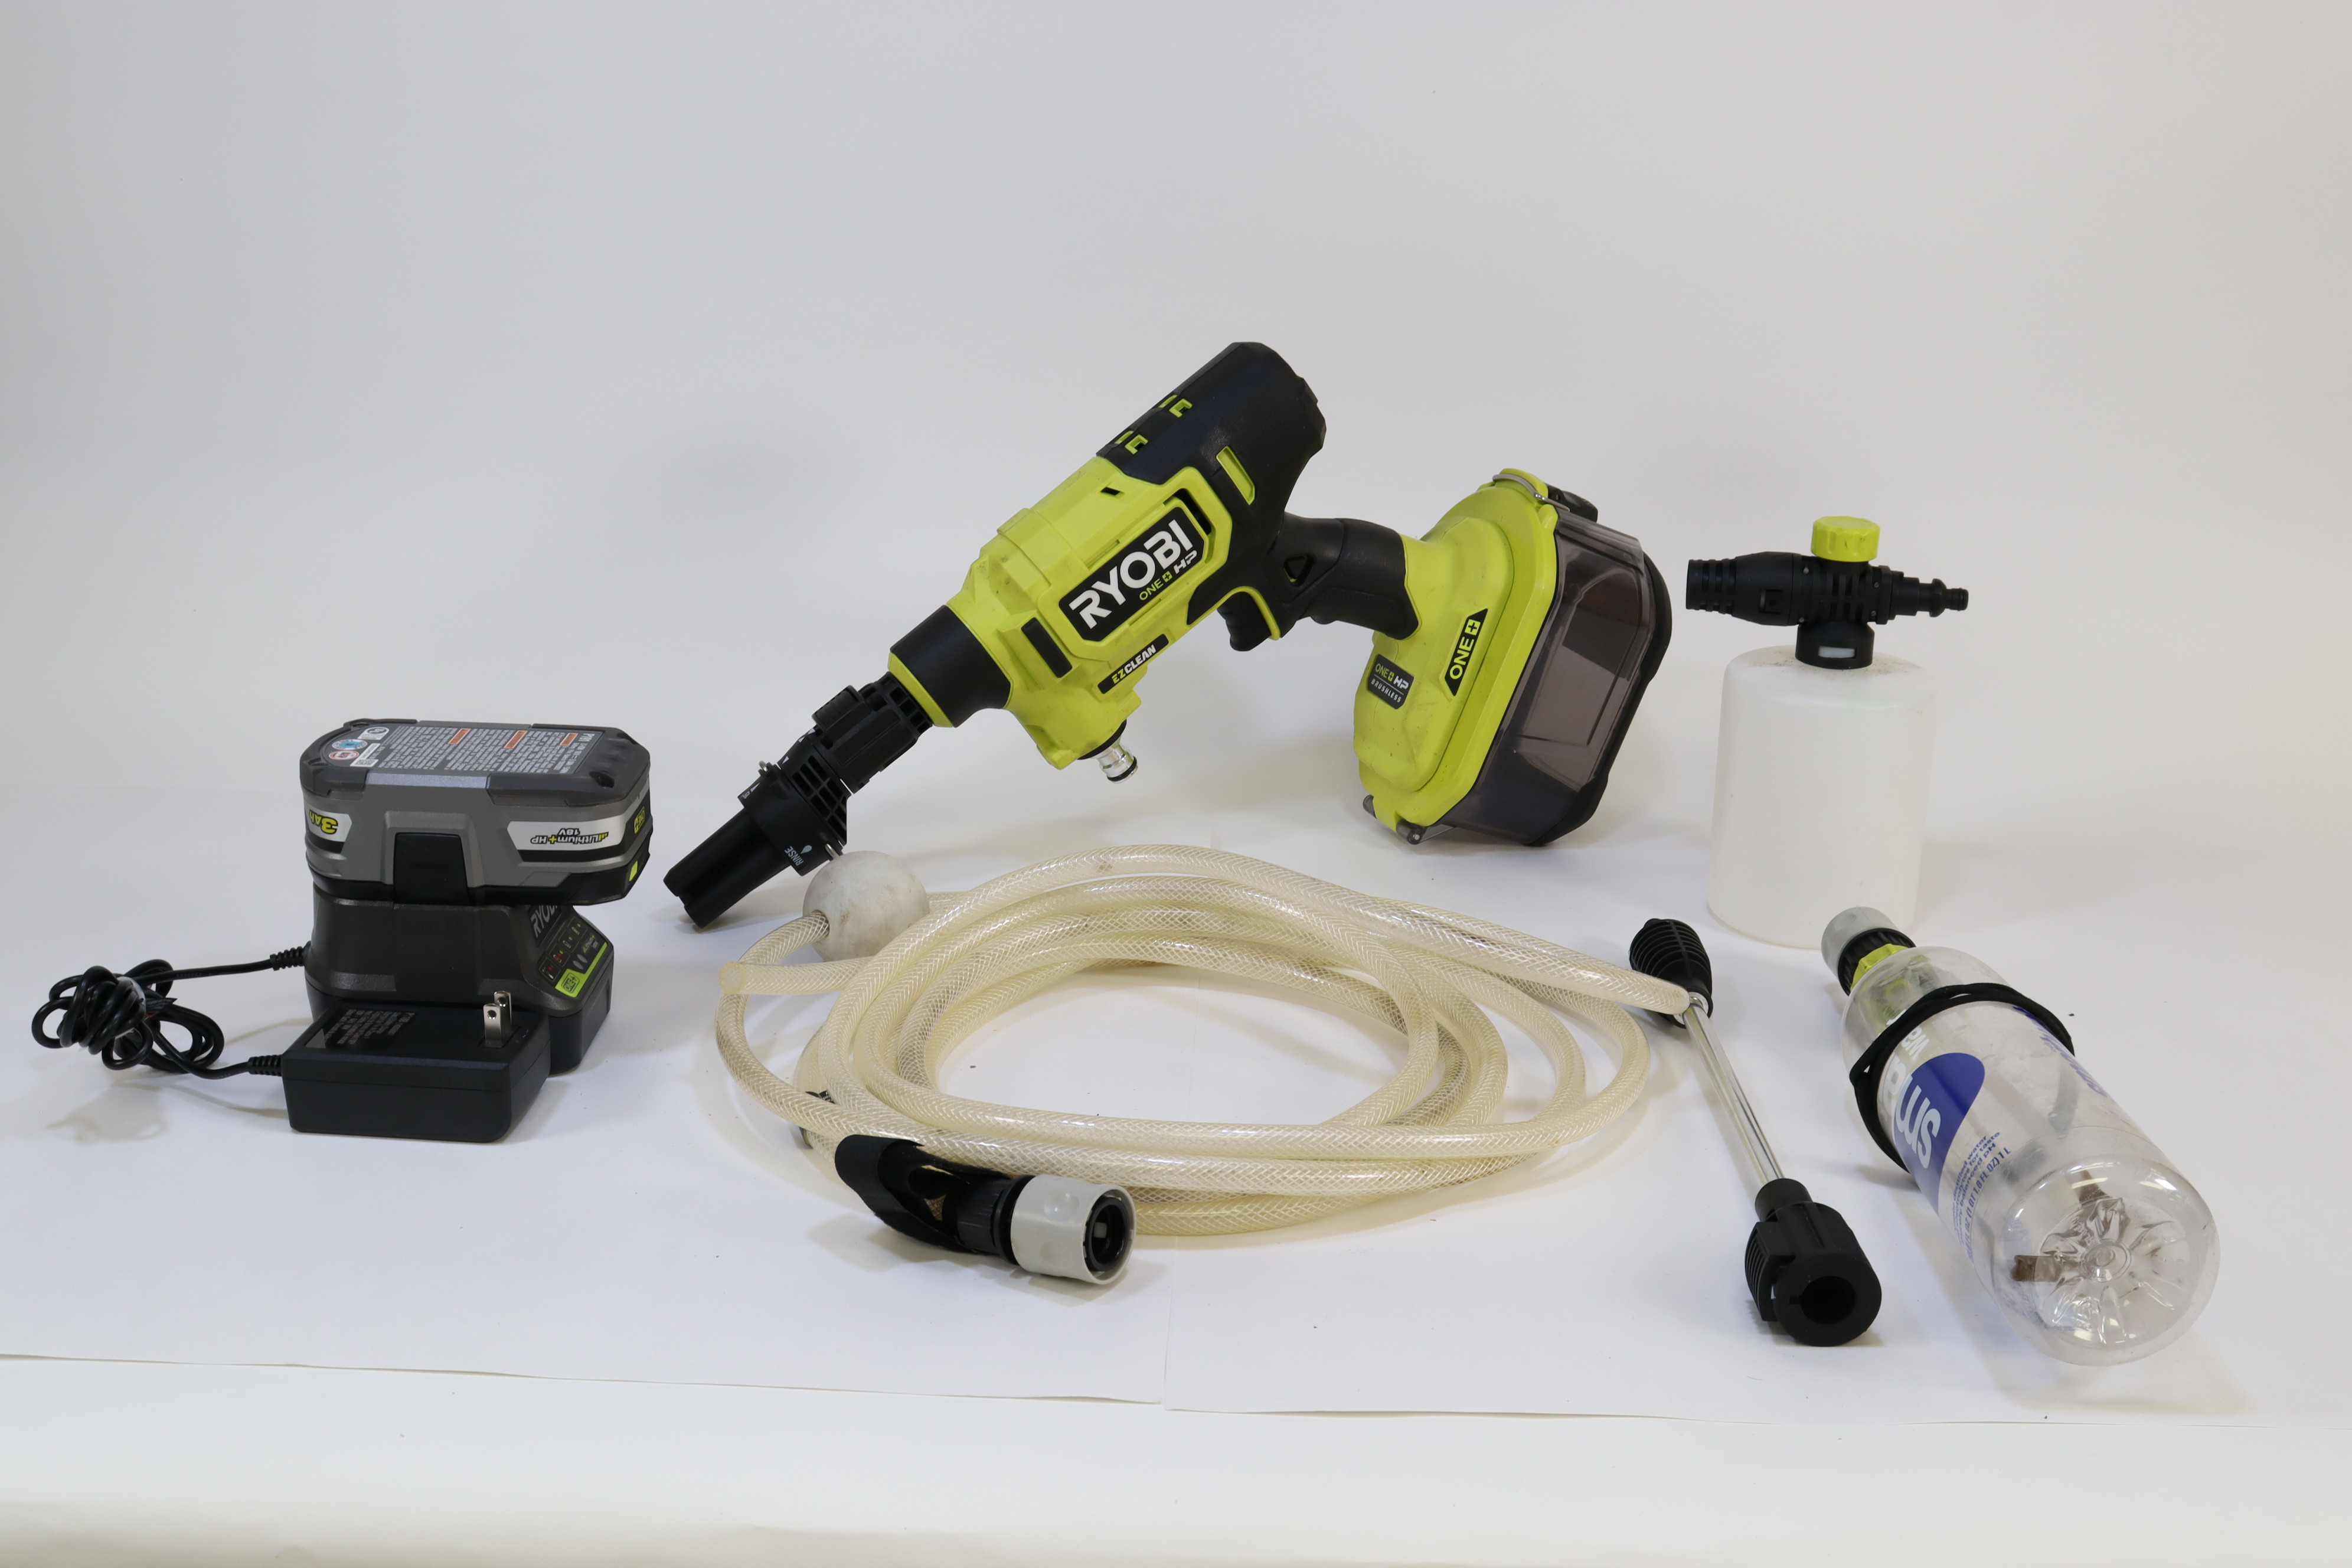 EZClean Power Cleaner Foam Blaster - RYOBI Tools